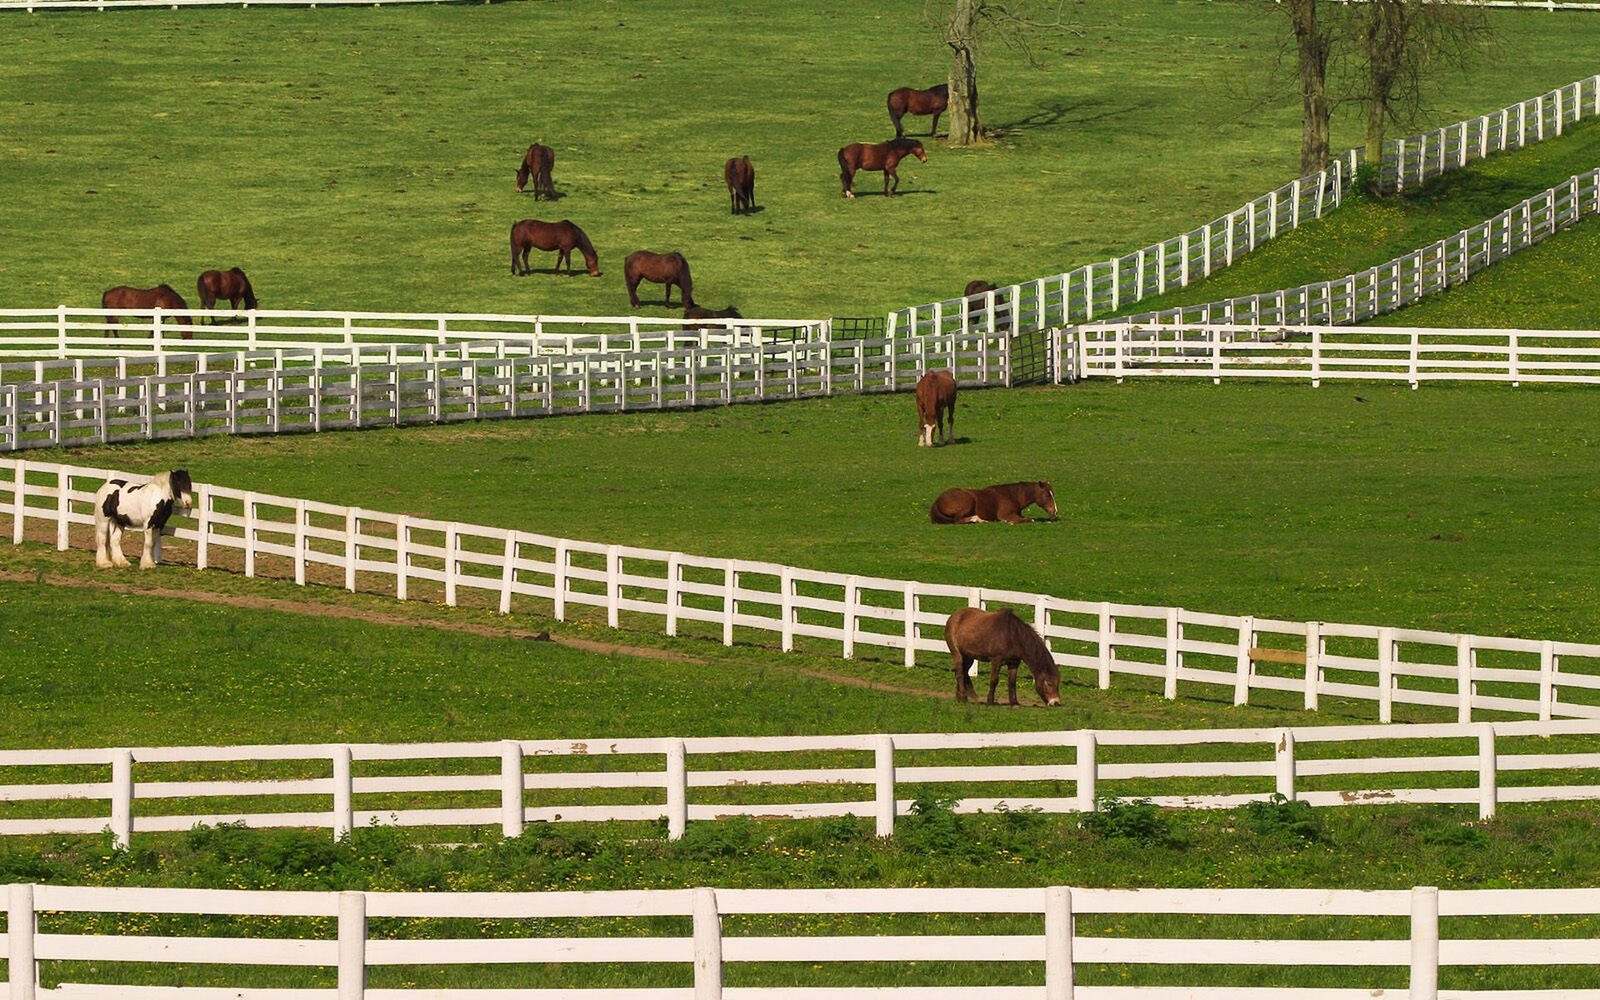 Wallpapers pens fences horses on the desktop